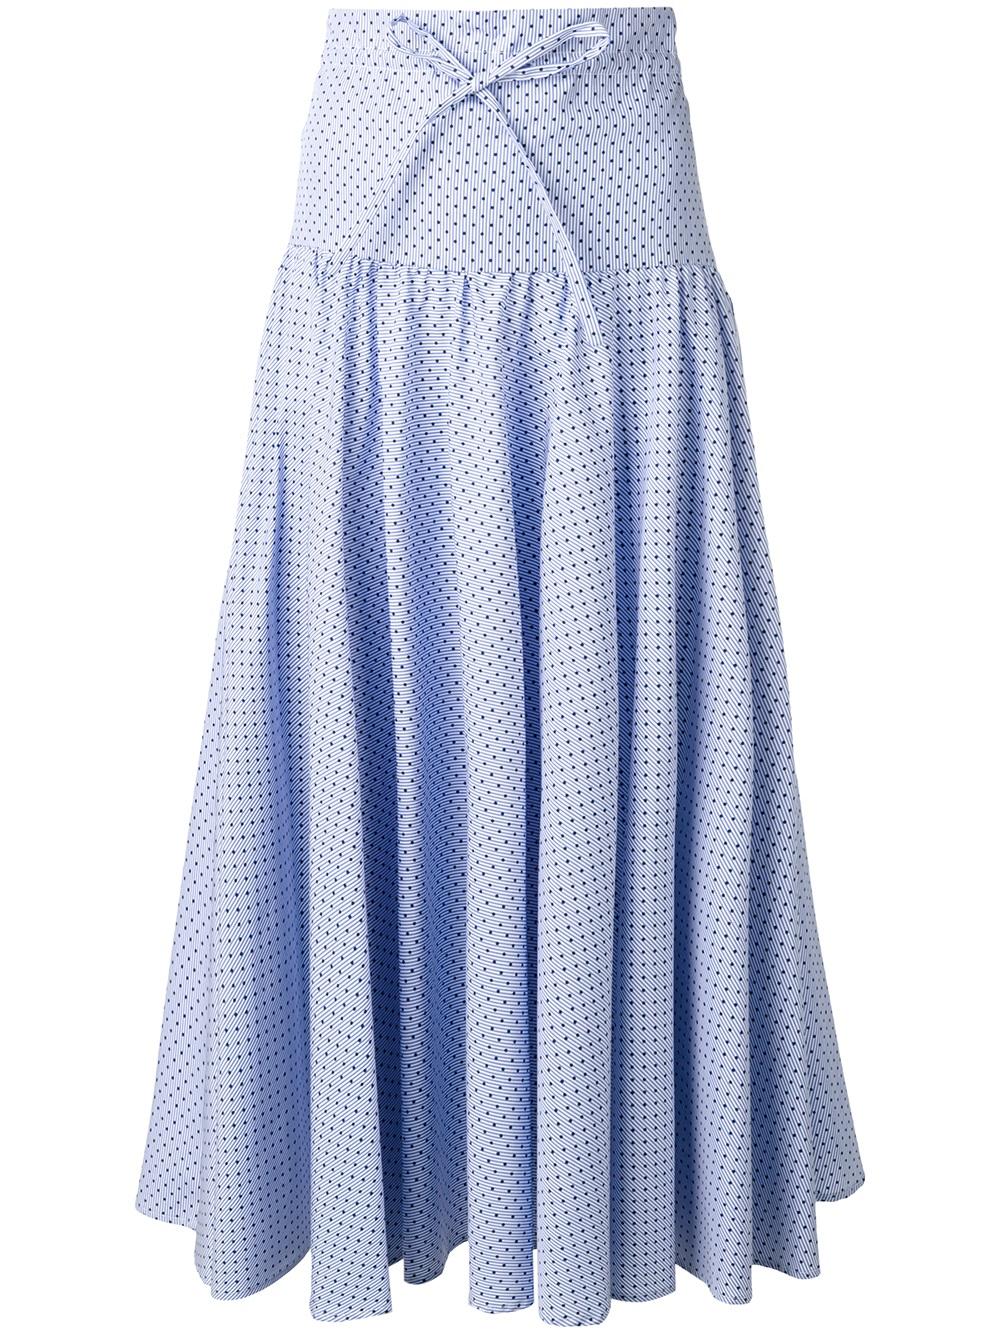 The Fashion Magpie Vivetta Flounce Skirt